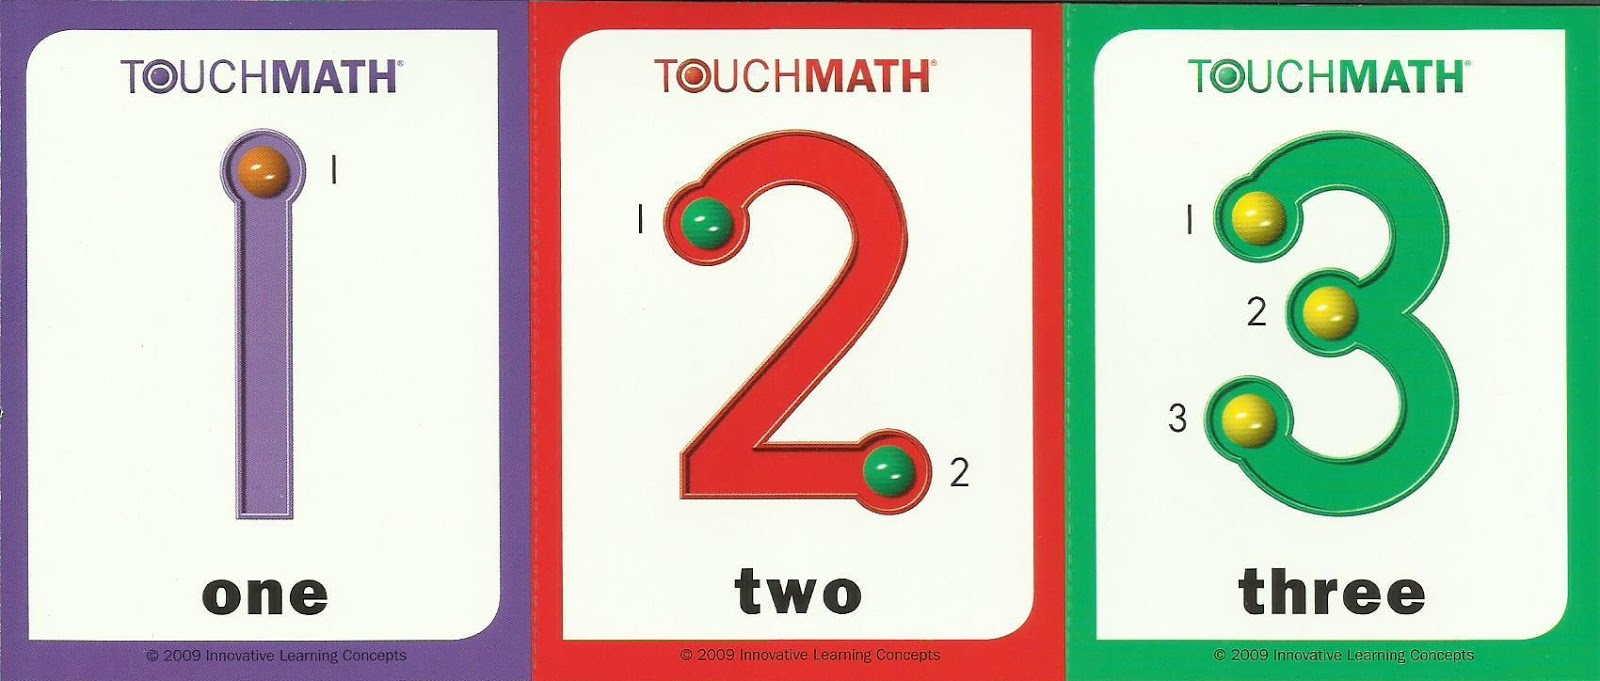 Touchmath 1 9 Youtube Maxresde Clubdetirologrono Touch Math 